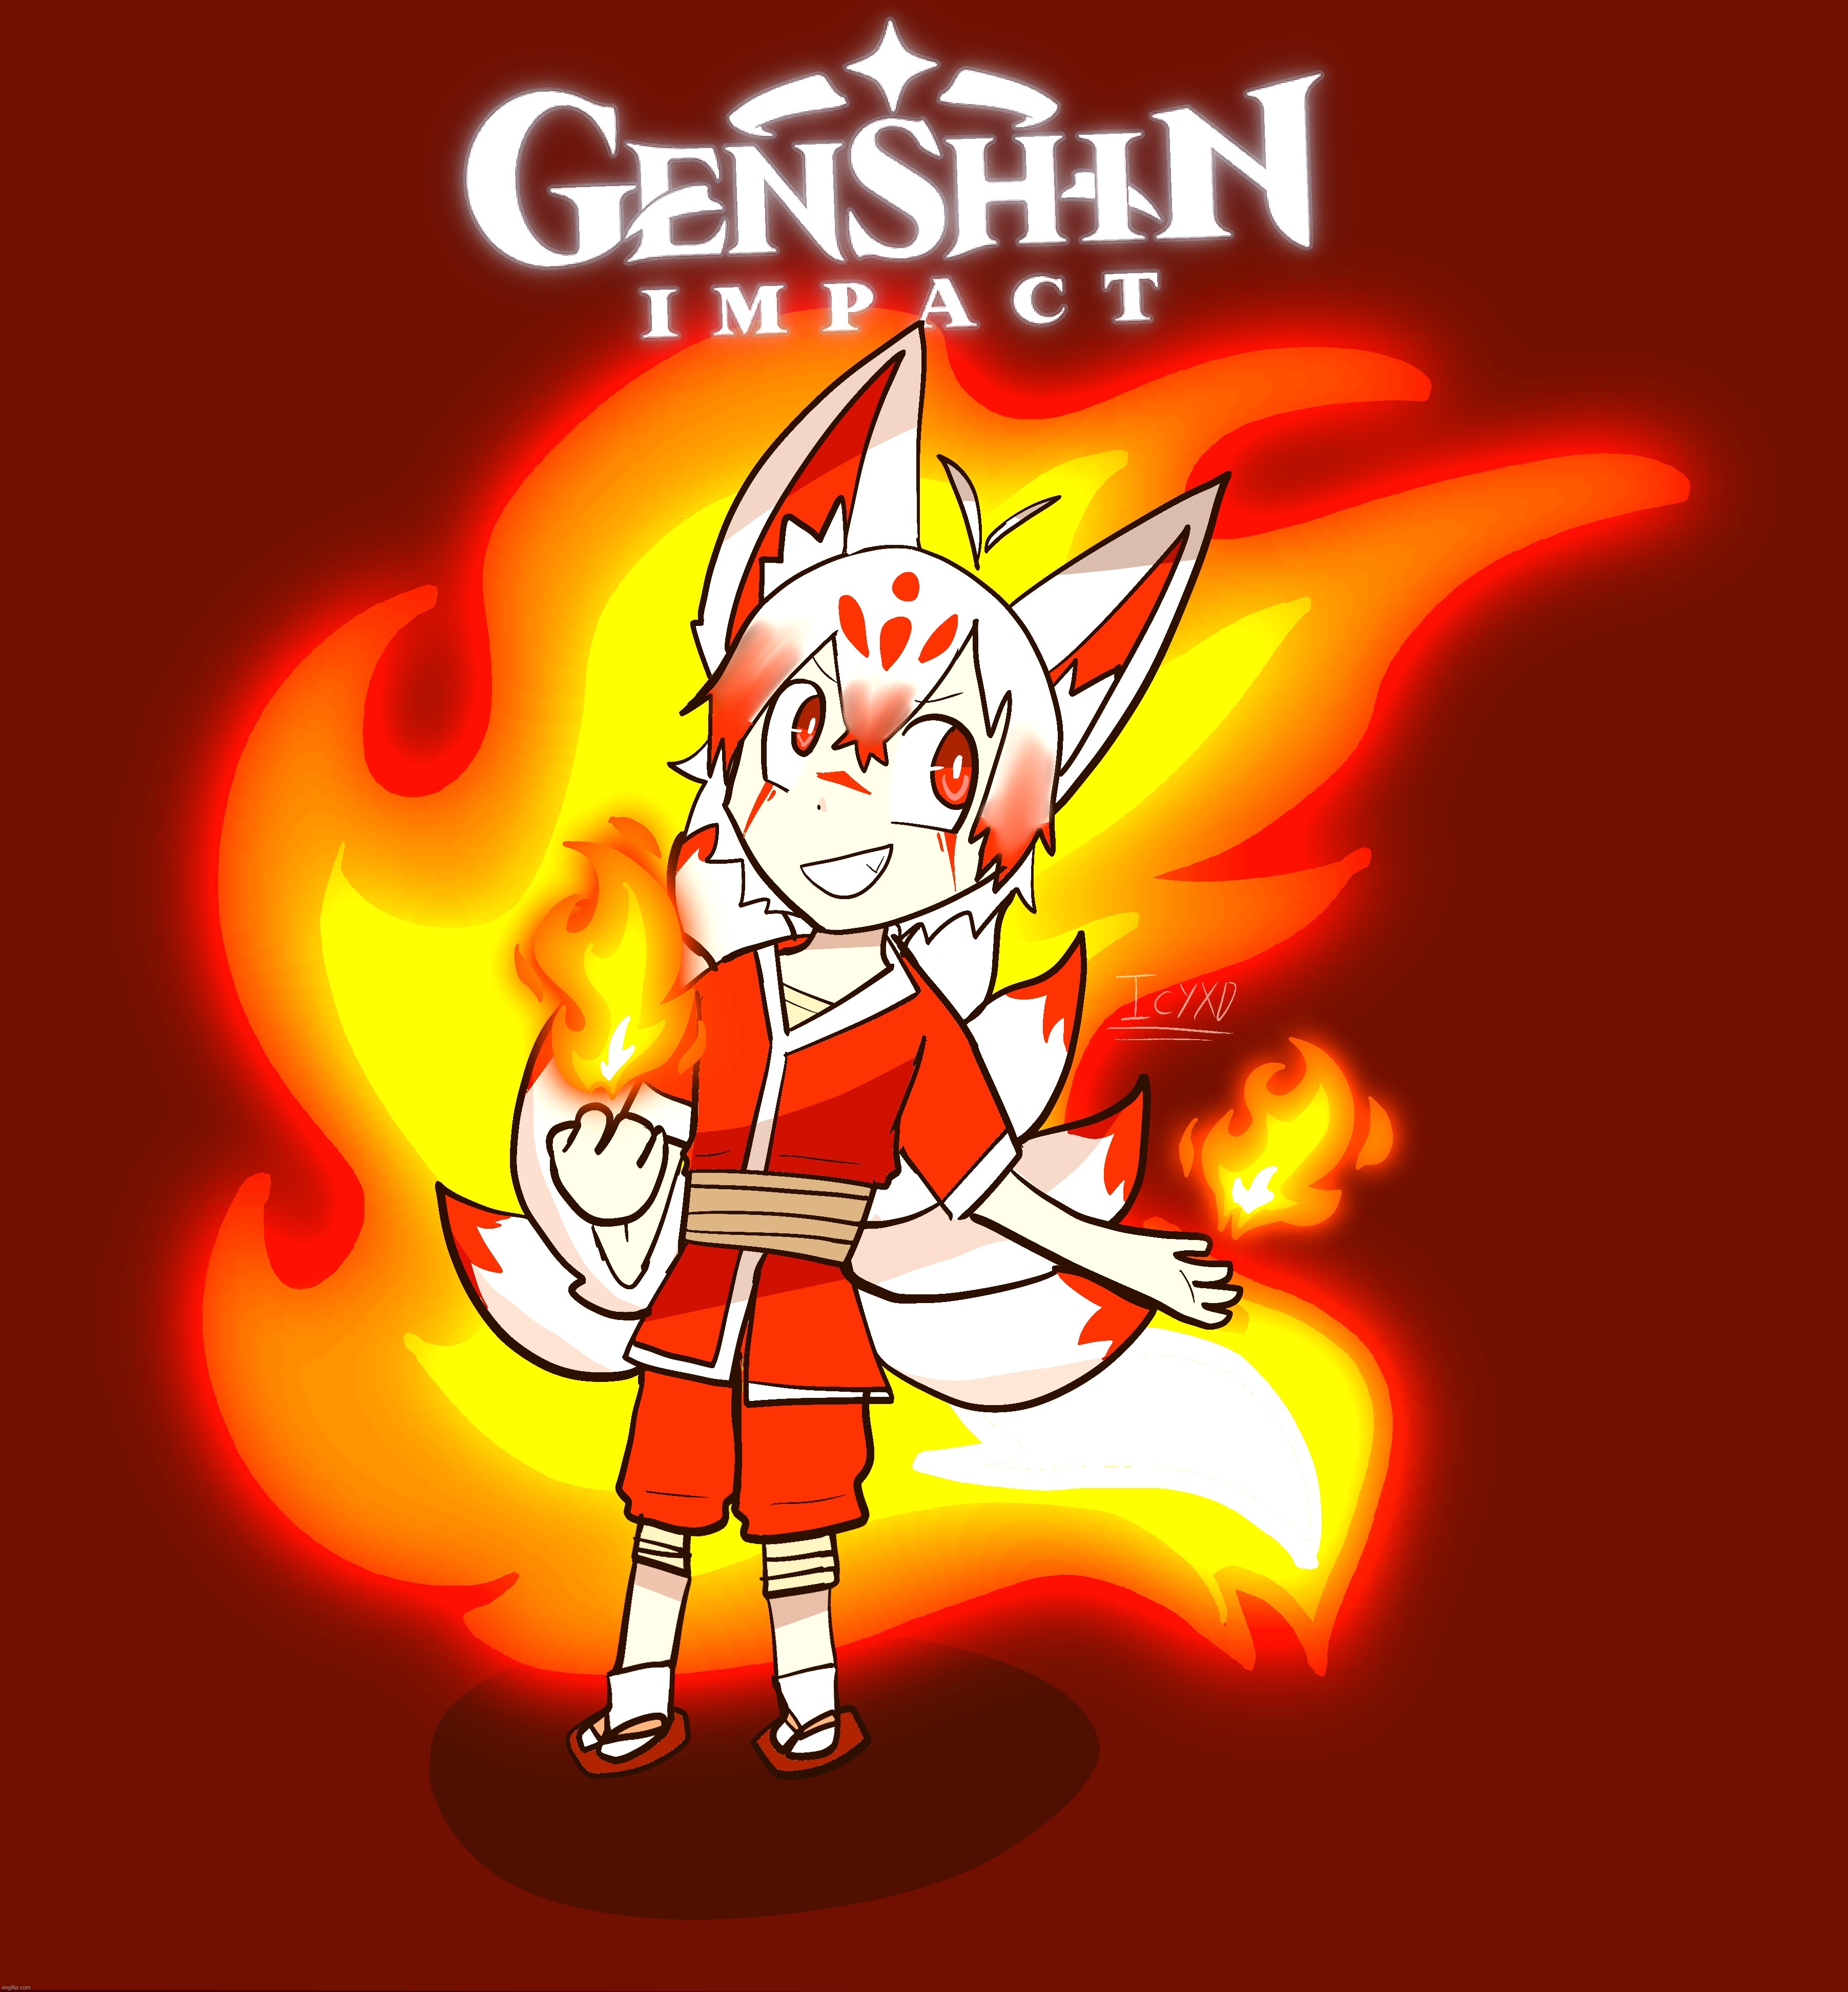 A Genshin Impact character idea!! His name is Kōri and he’s a Kitsune fire spirit | image tagged in genshin impact,kitsune | made w/ Imgflip meme maker